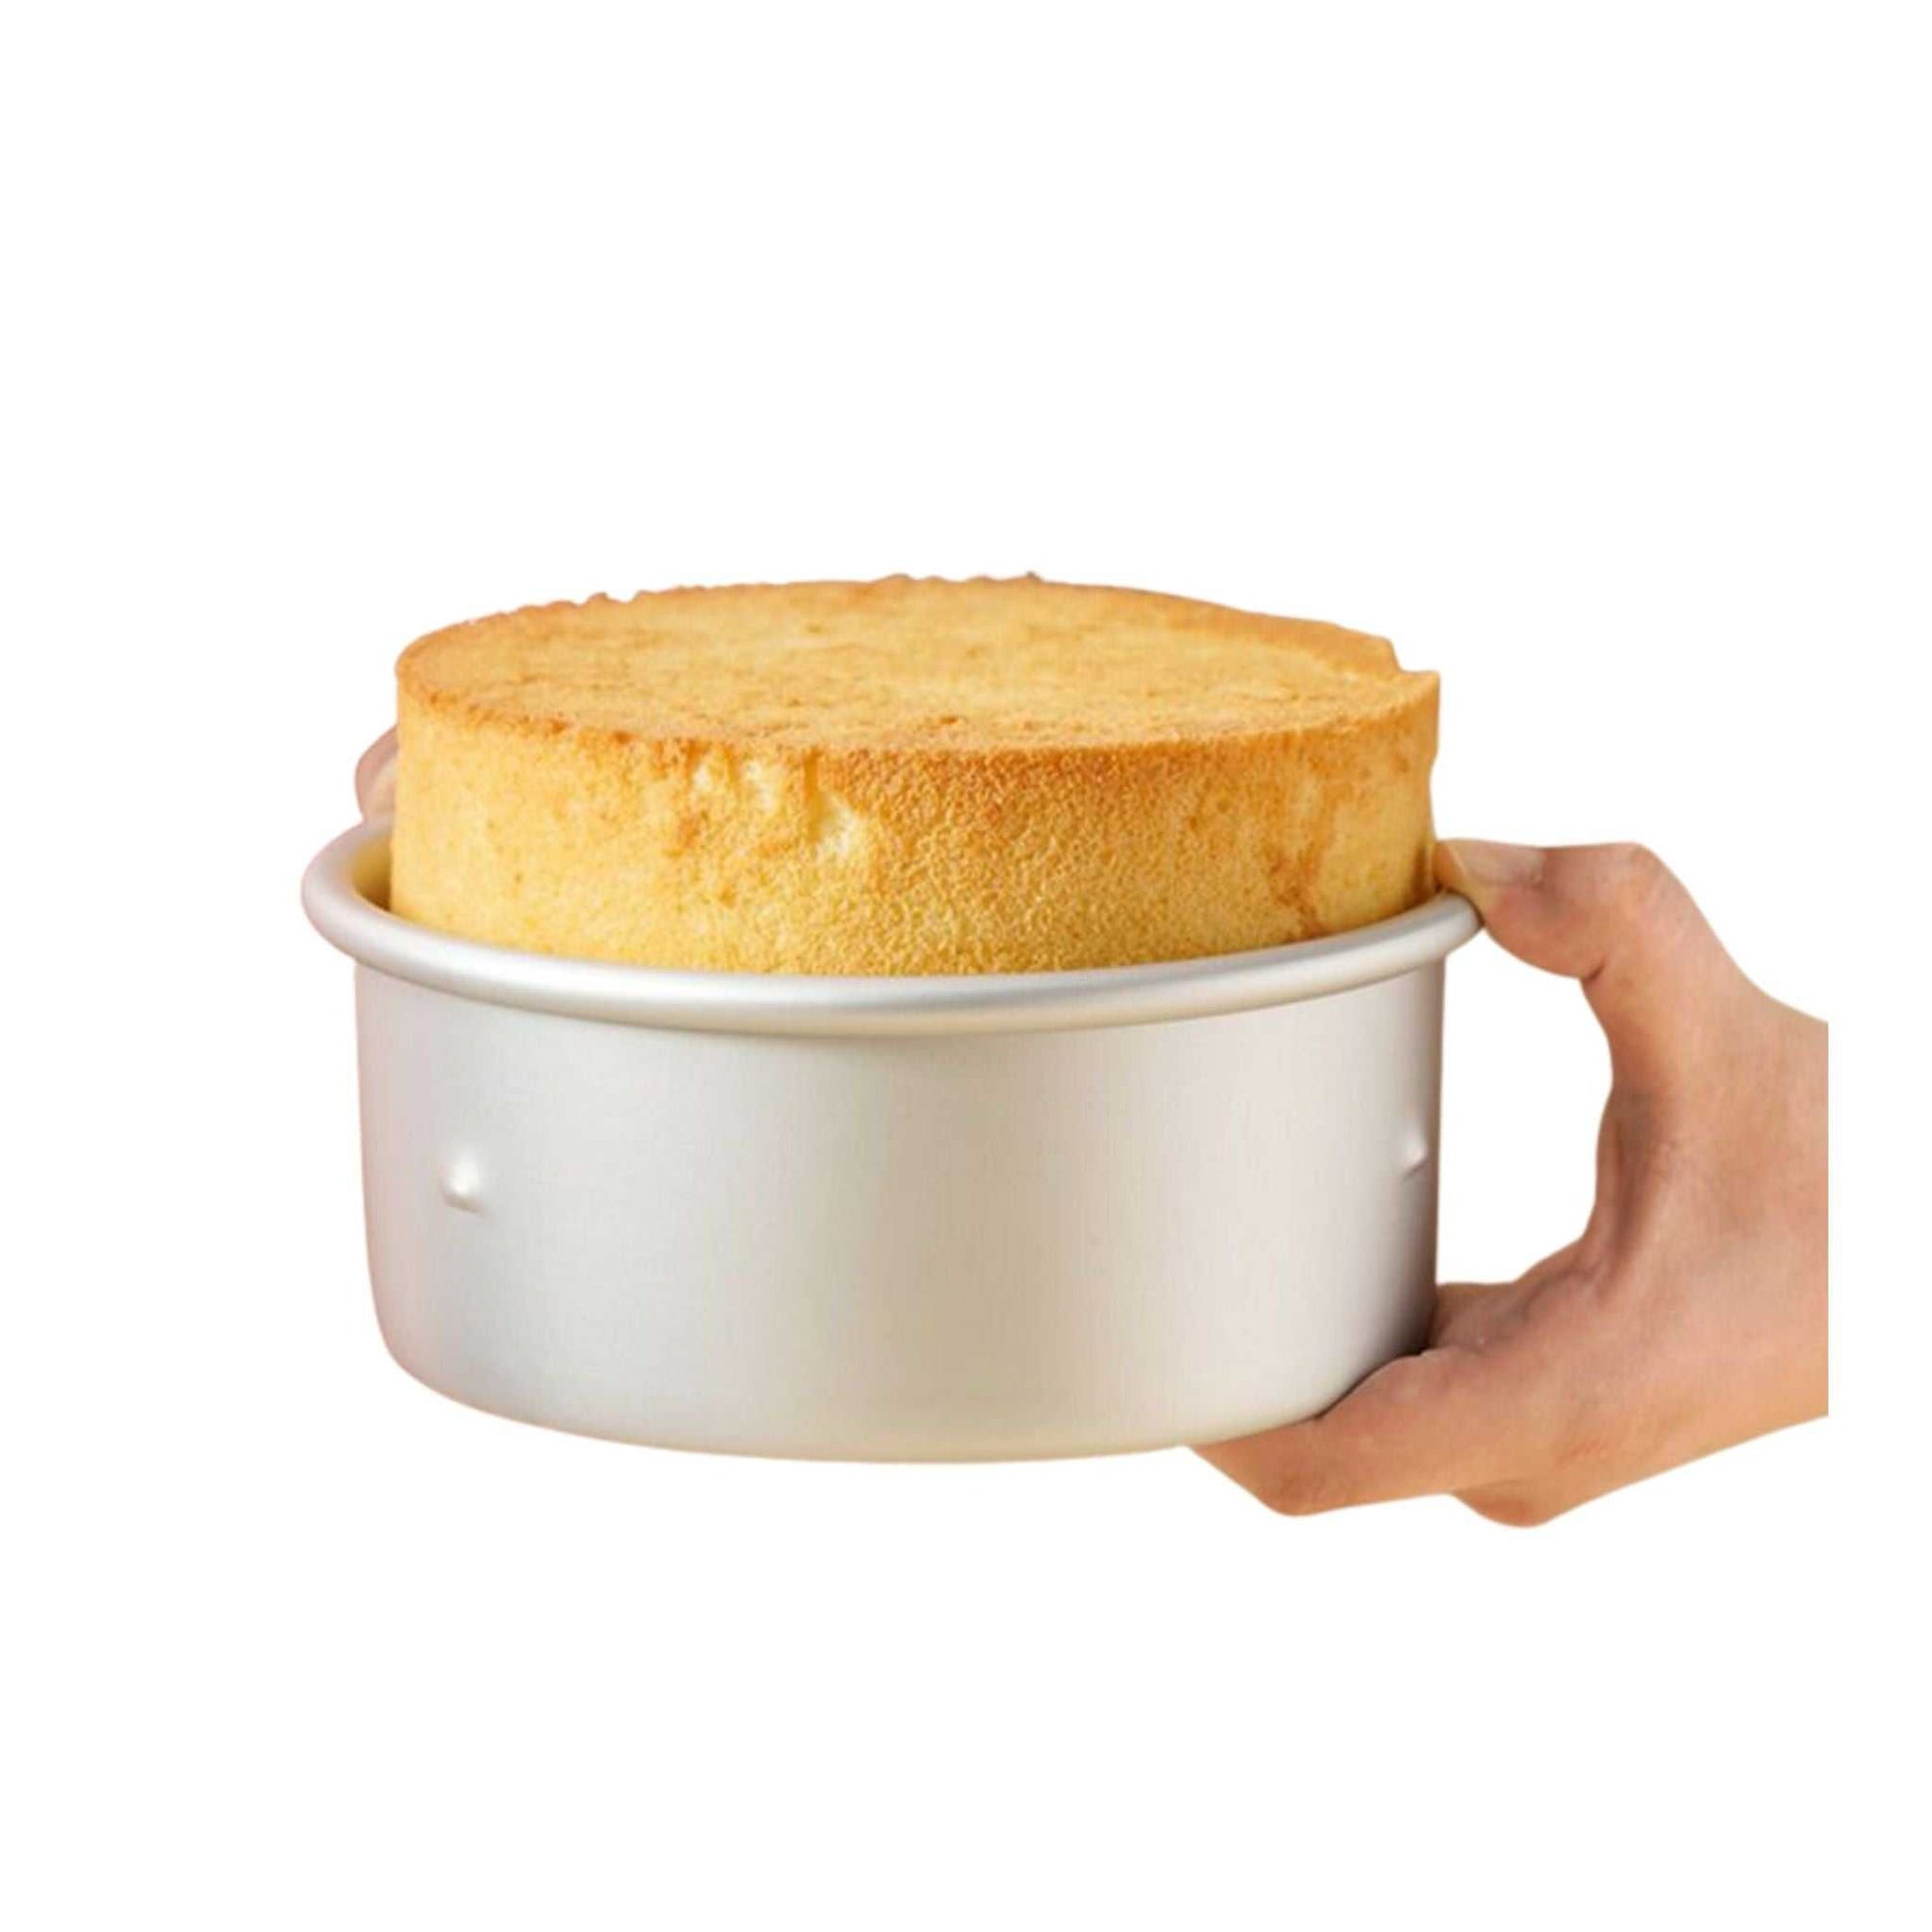 Fixed/Loose Bottom Round Cake Mold Aluminum Cake Pan Set 2-14 Inch Cake  Baking Pan With Bowl Scraper and Stripping Chiffon Cake